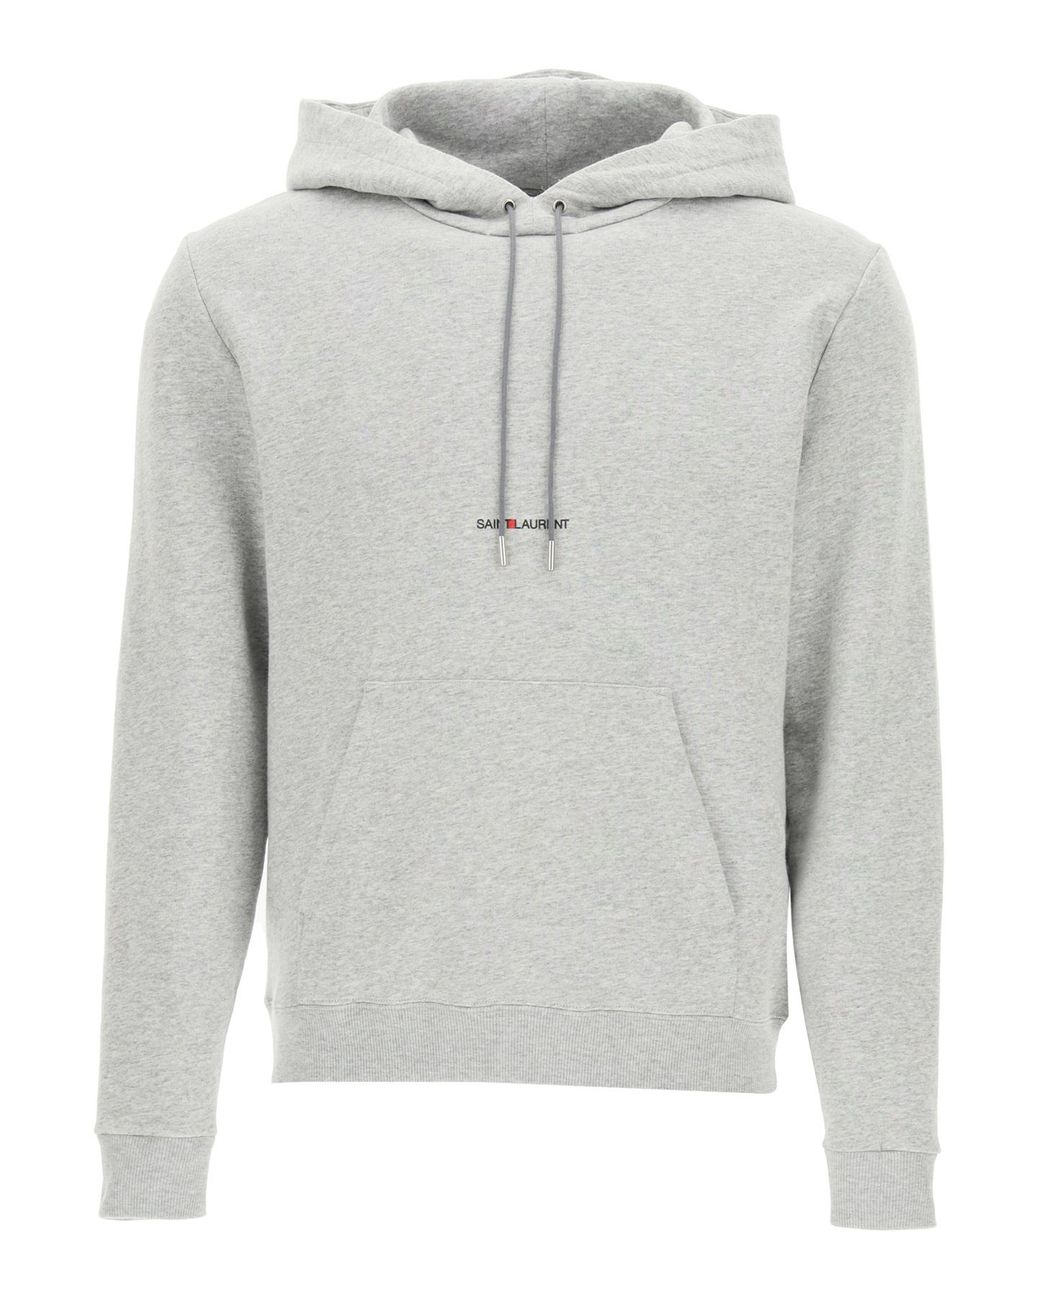 Saint Laurent Cotton Logo Print Hoodie in Grey (Gray) for Men - Lyst